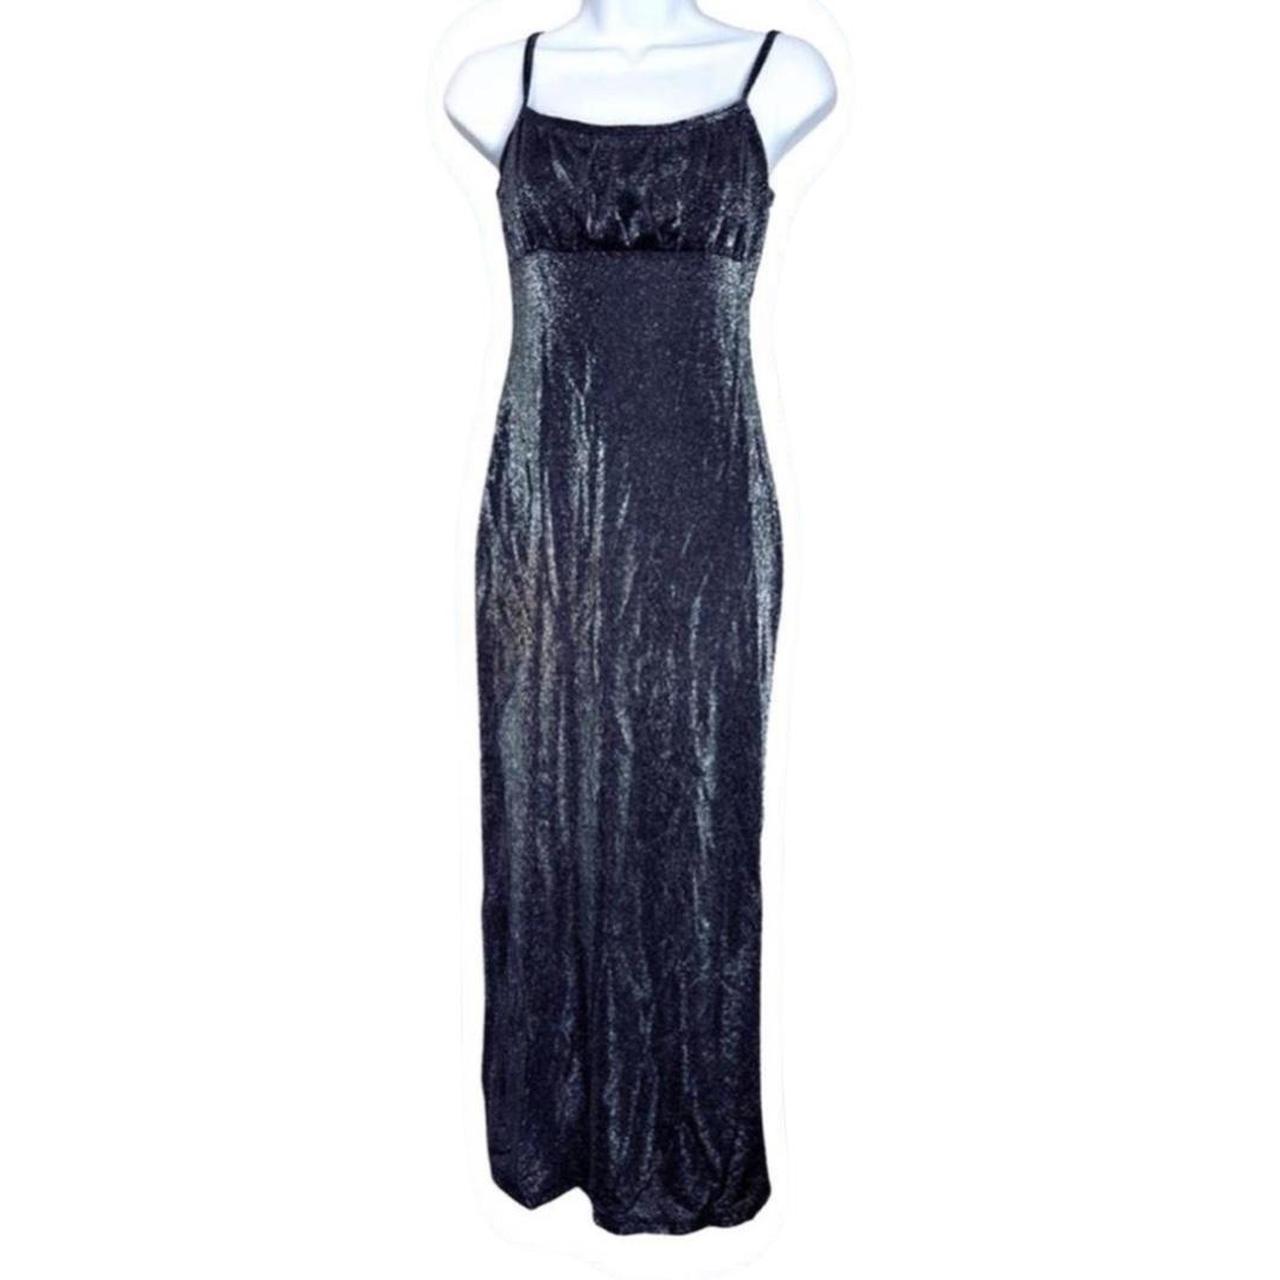 90s vampy whimsygoth metallic dress size 3 Super... - Depop